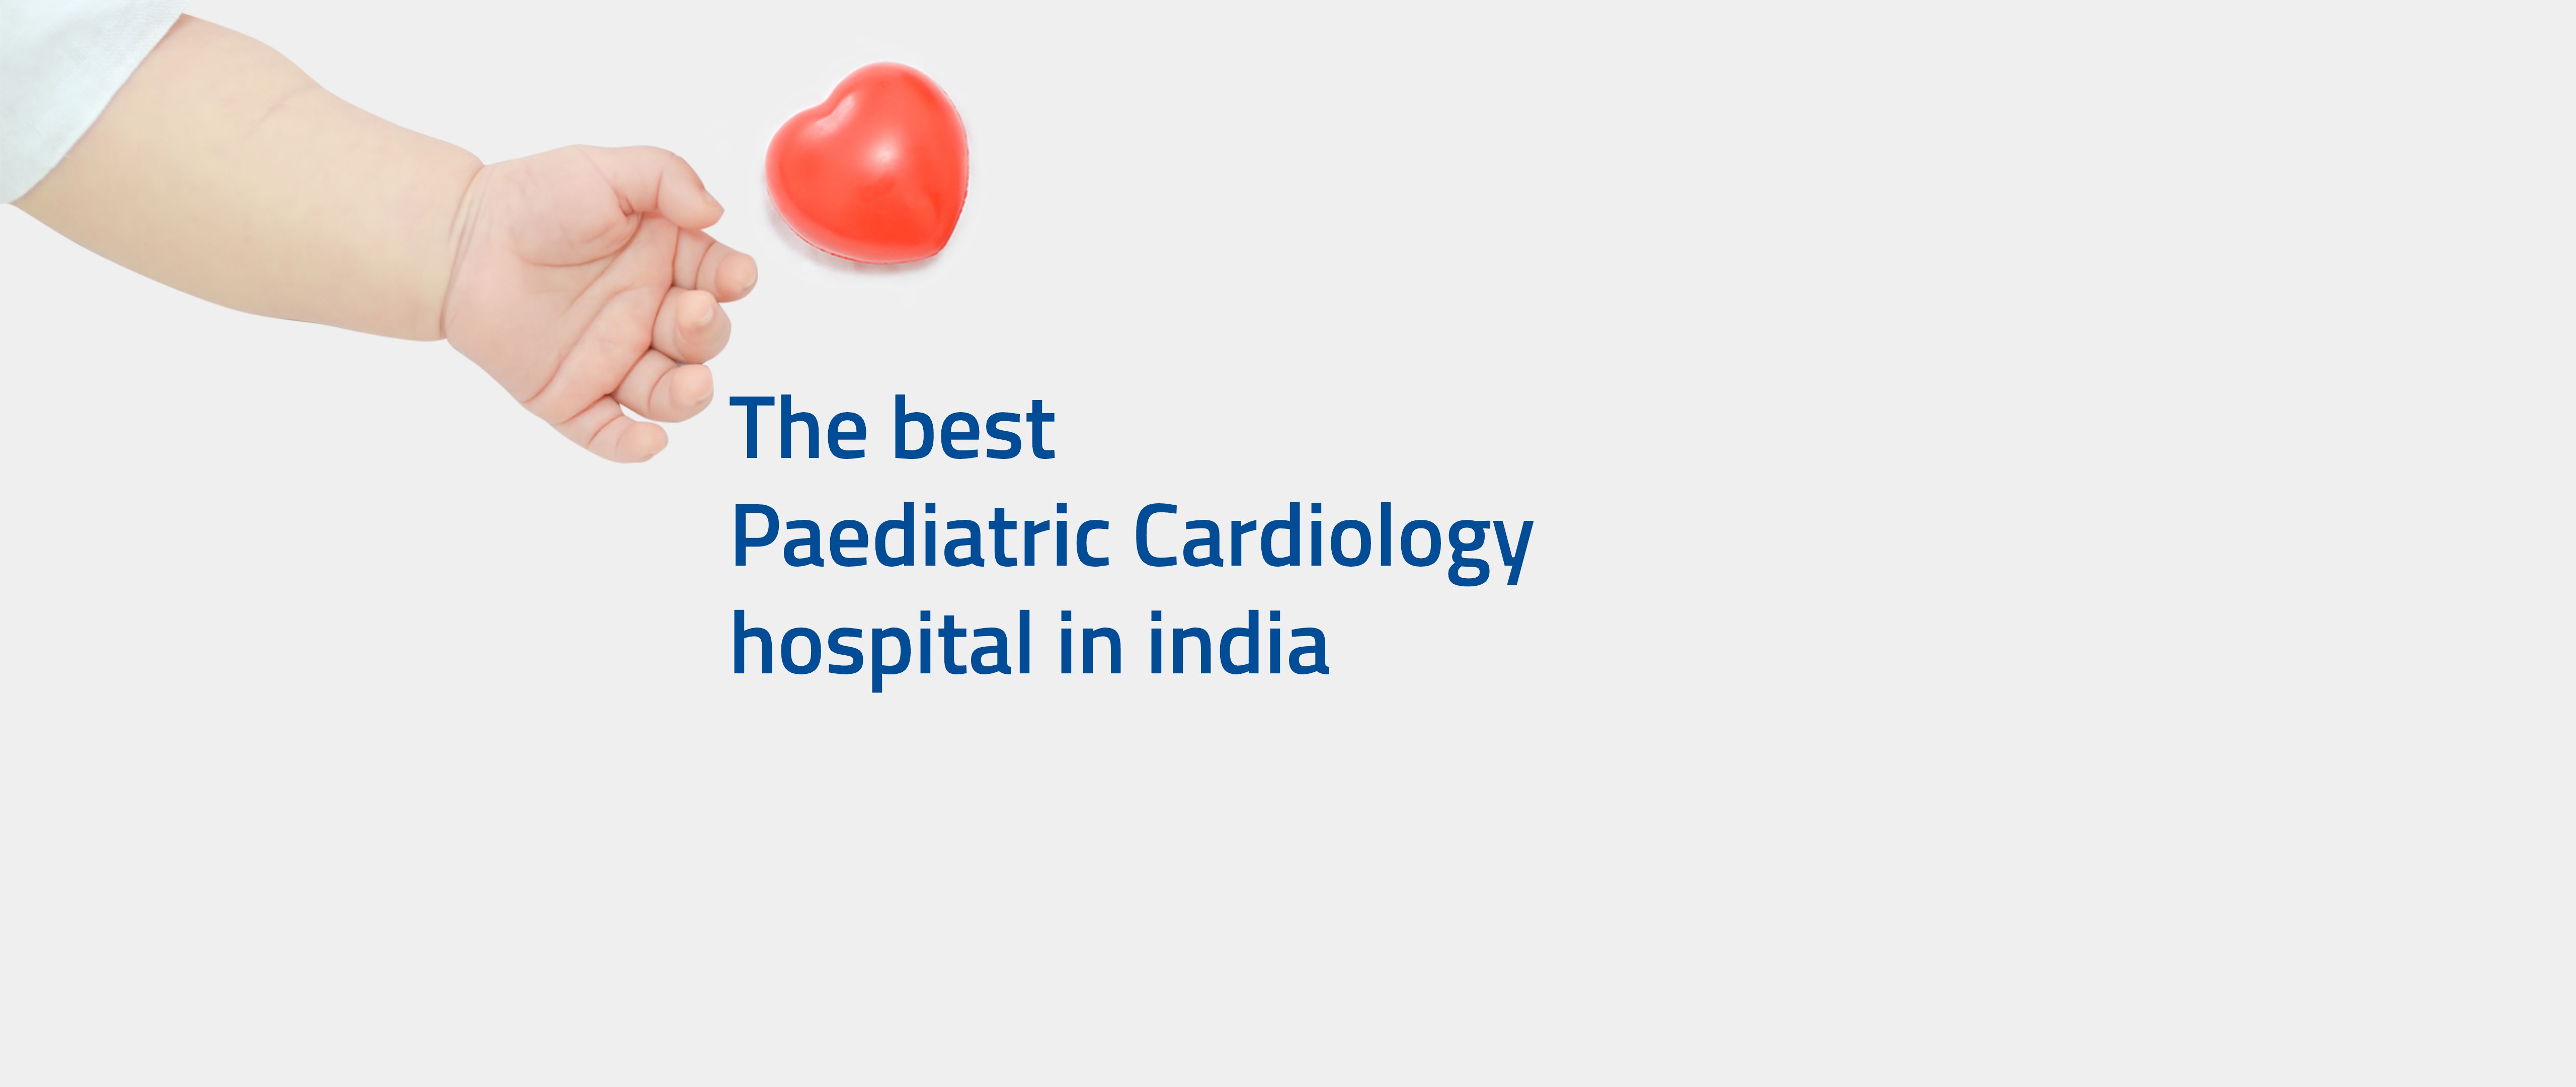 Peadiatric Cardiology